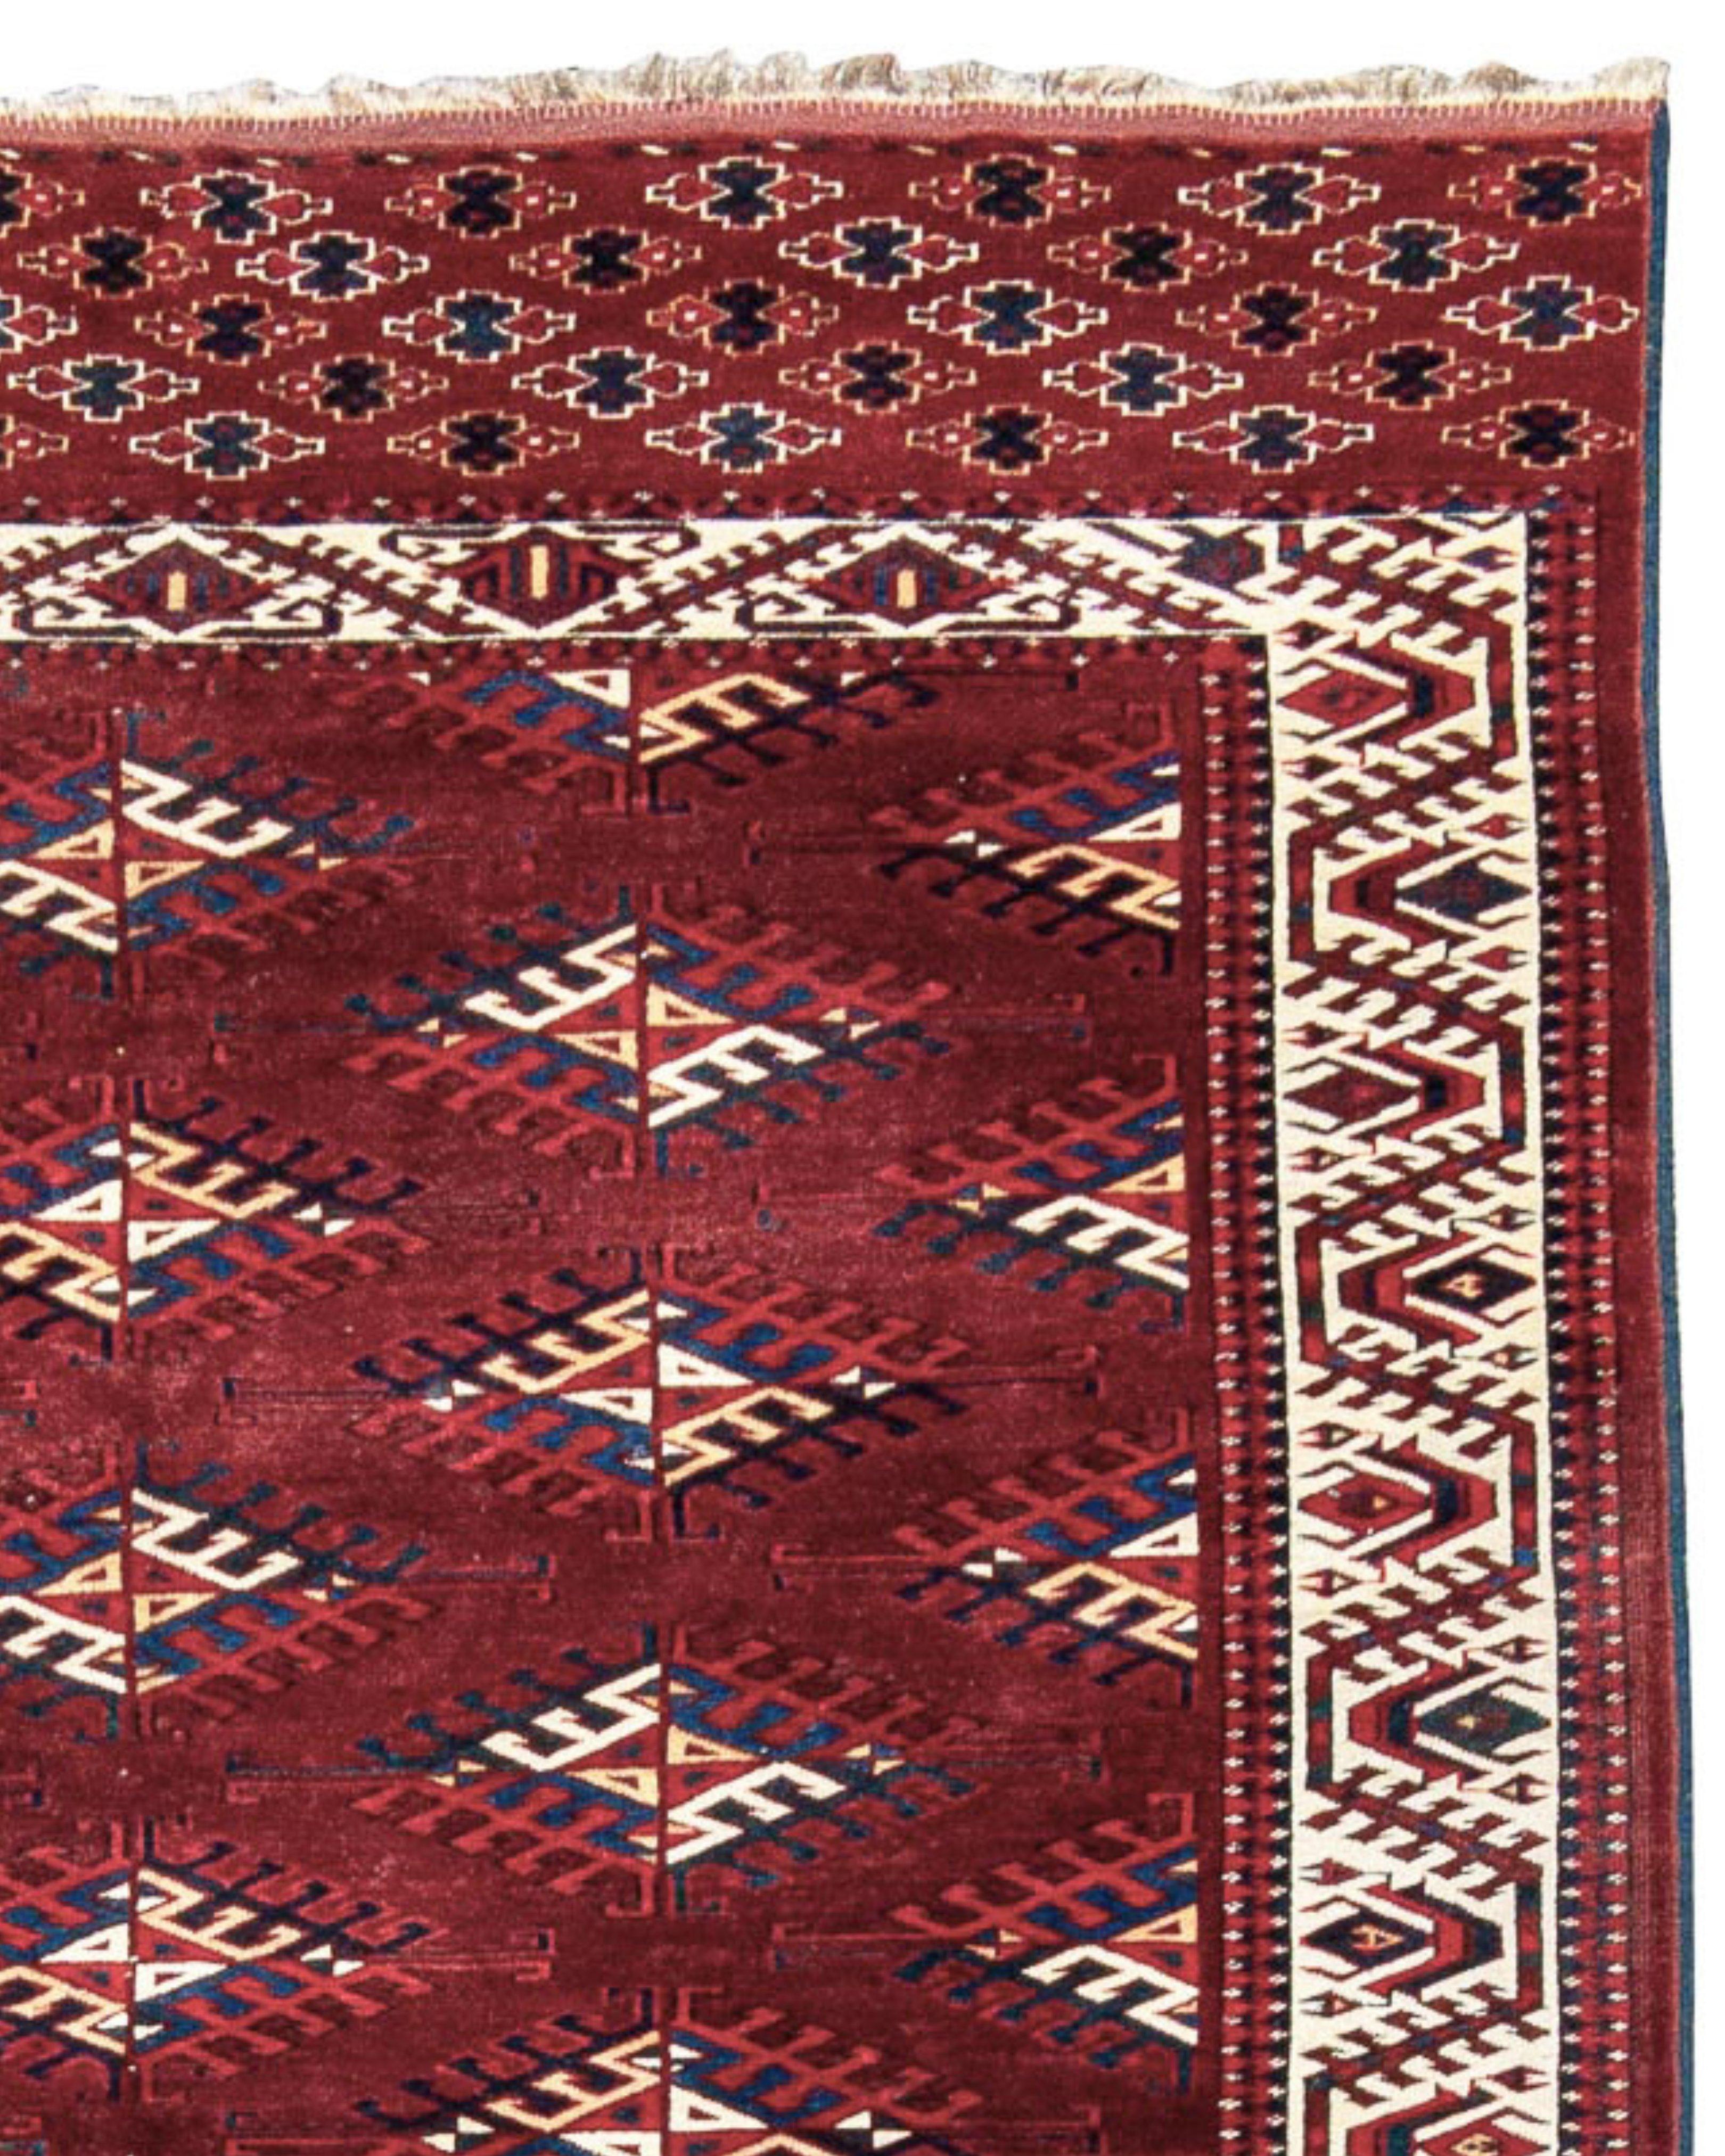 Antique Turkmen Yomut Main Carpet Rug, 19th Century

Additional information:
Dimensions: 5'7